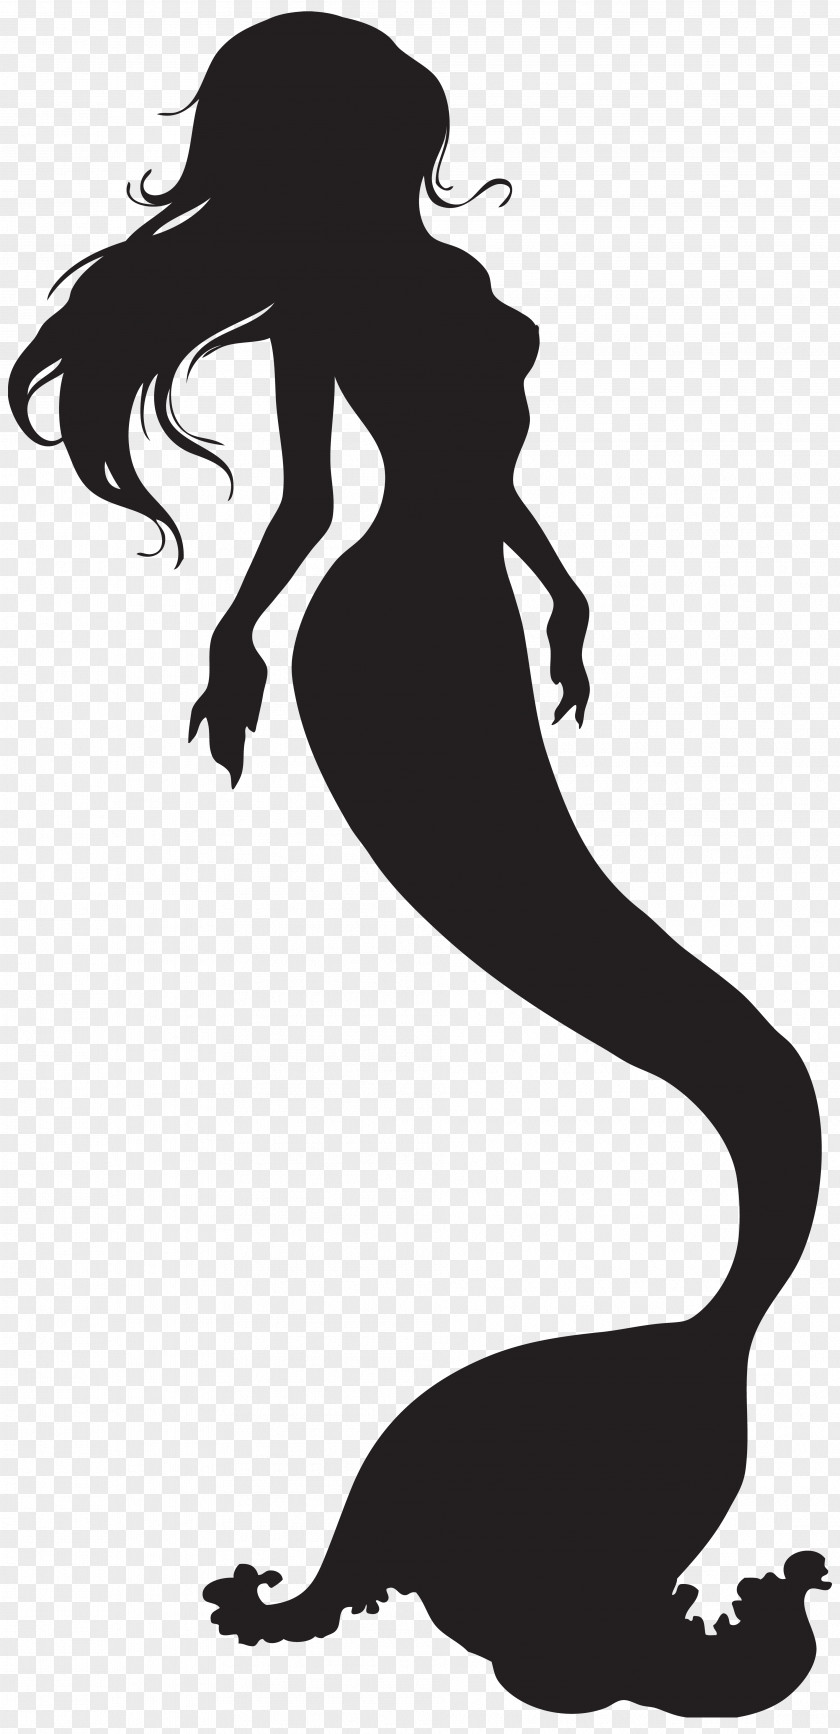 Mermaid Silhouette Clip Art Image PNG